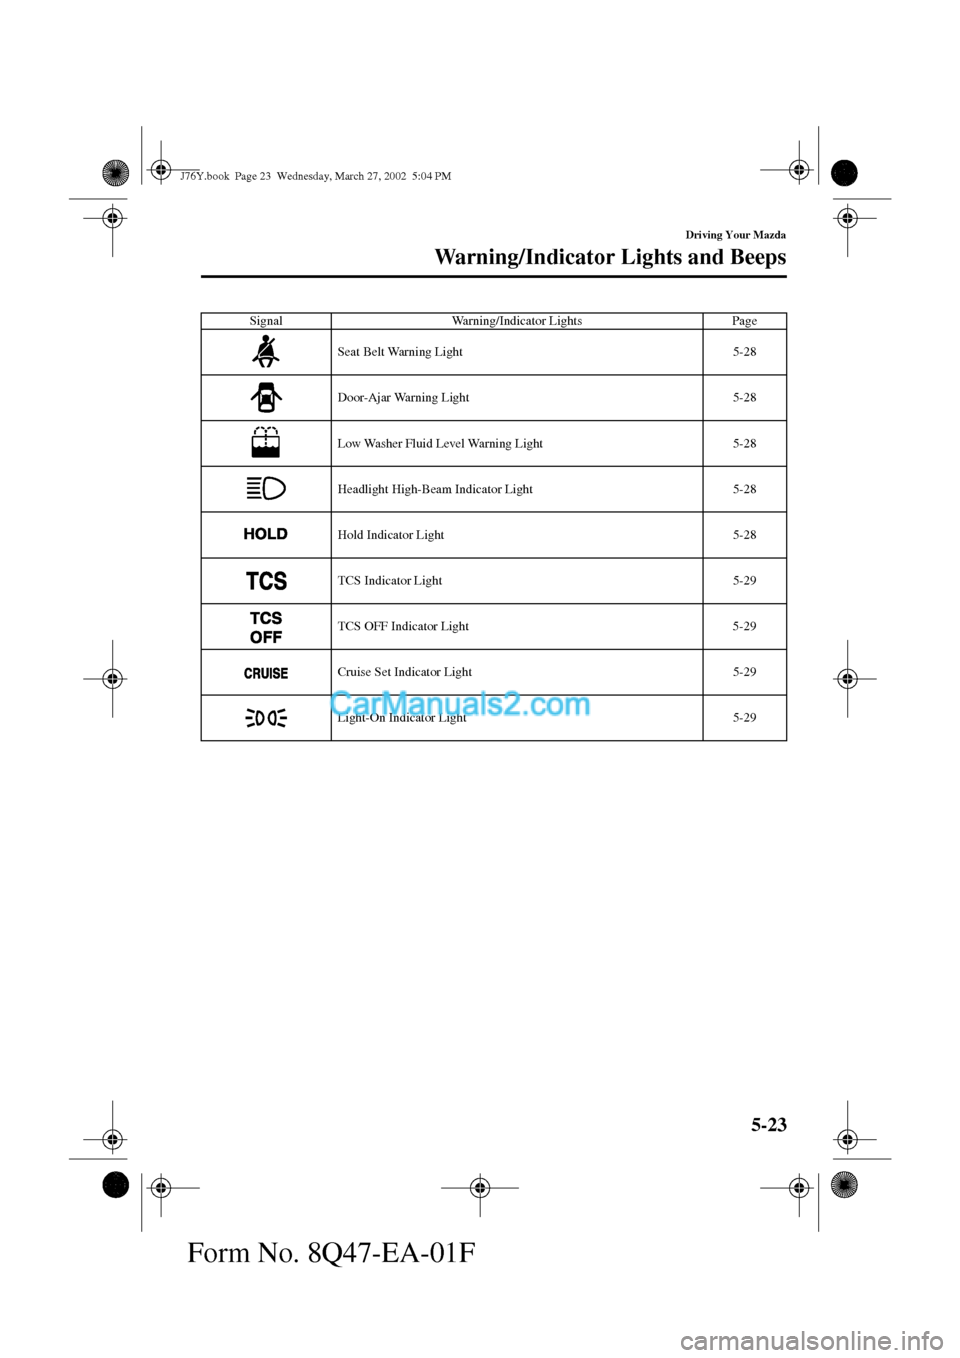 MAZDA MODEL MILLENIA 2002  Owners Manual (in English) 5-23
Driving Your Mazda
Warning/Indicator Lights and Beeps
Form No. 8Q47-EA-01F
Seat Belt Warning Light 5-28
Door-Ajar Warning Light 5-28
Low Washer Fluid Level Warning Light 5-28
Headlight High-Beam 